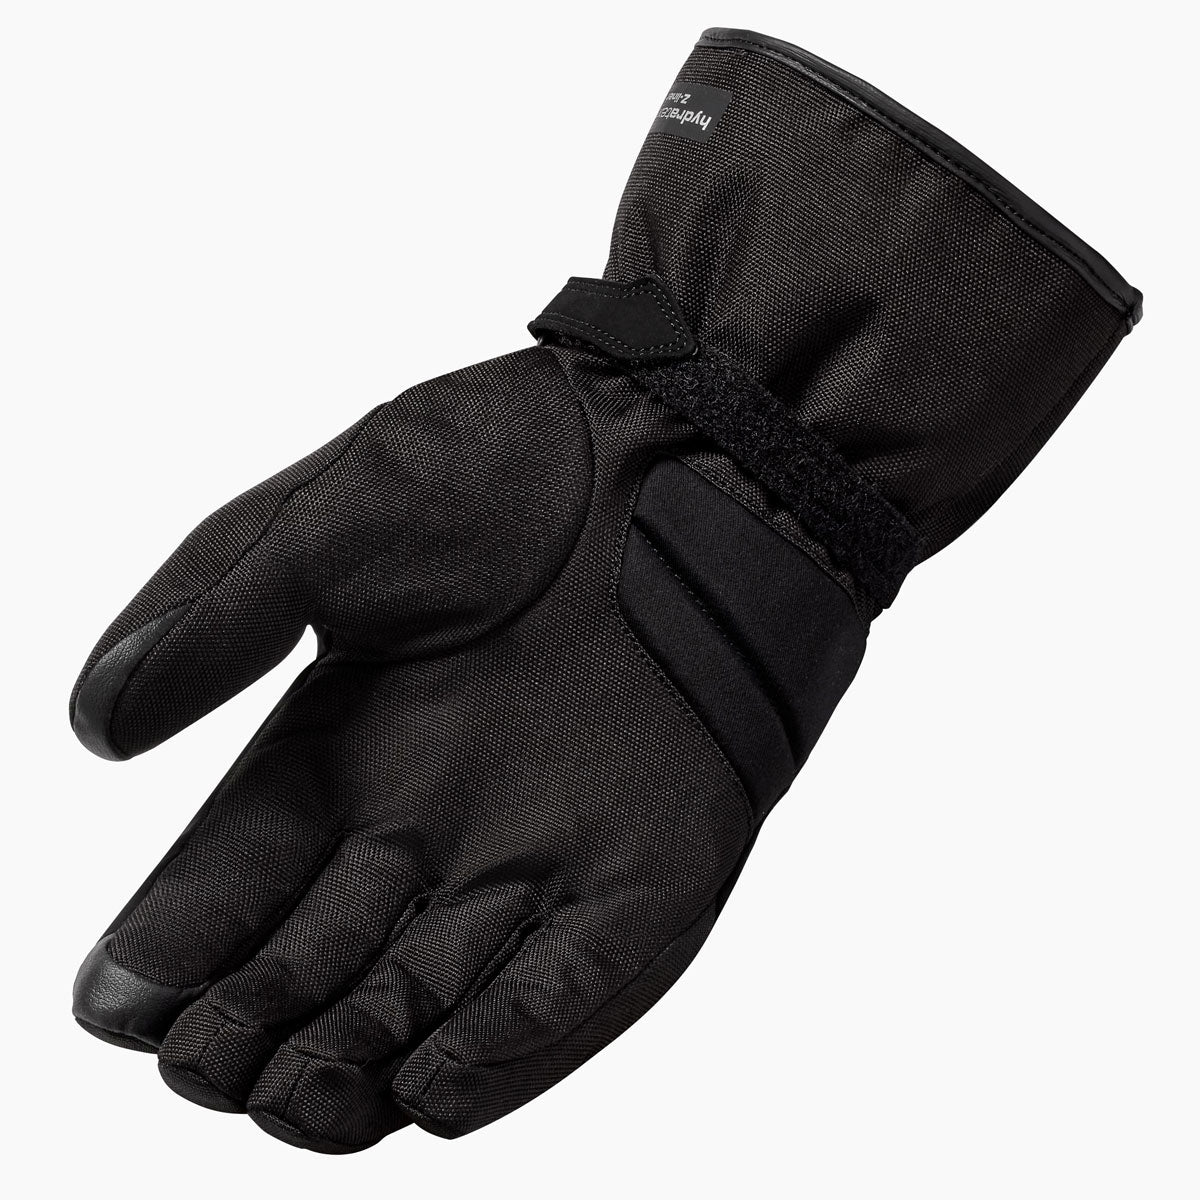 Rev It Lava waterproof & thermal winter motorcycle gloves: Lighter winter gloves for shorter urban journeys - palm